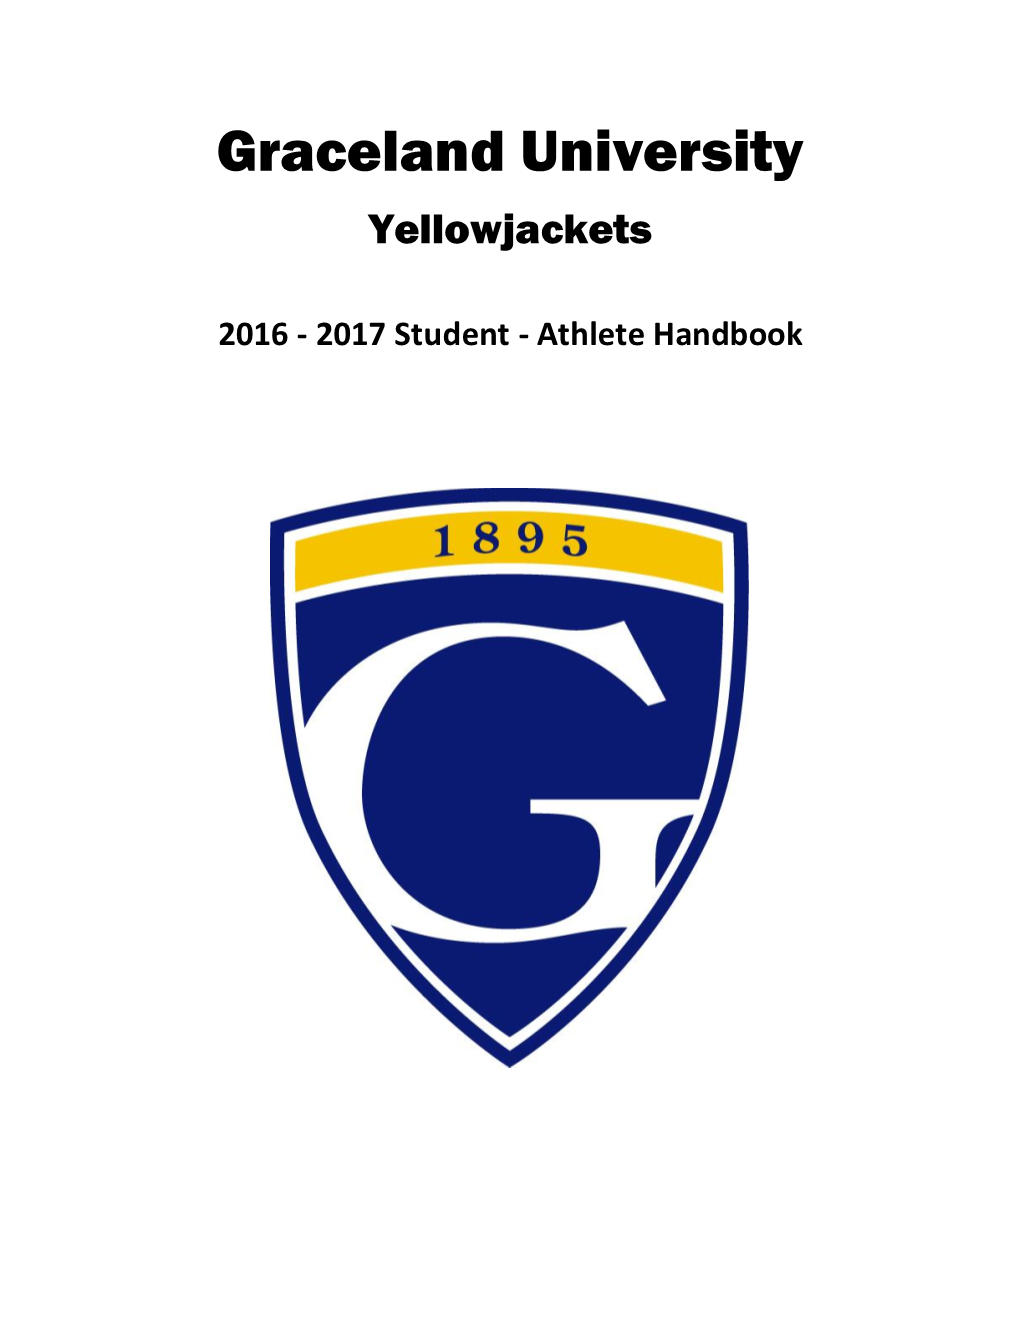 2017 Student - Athlete Handbook